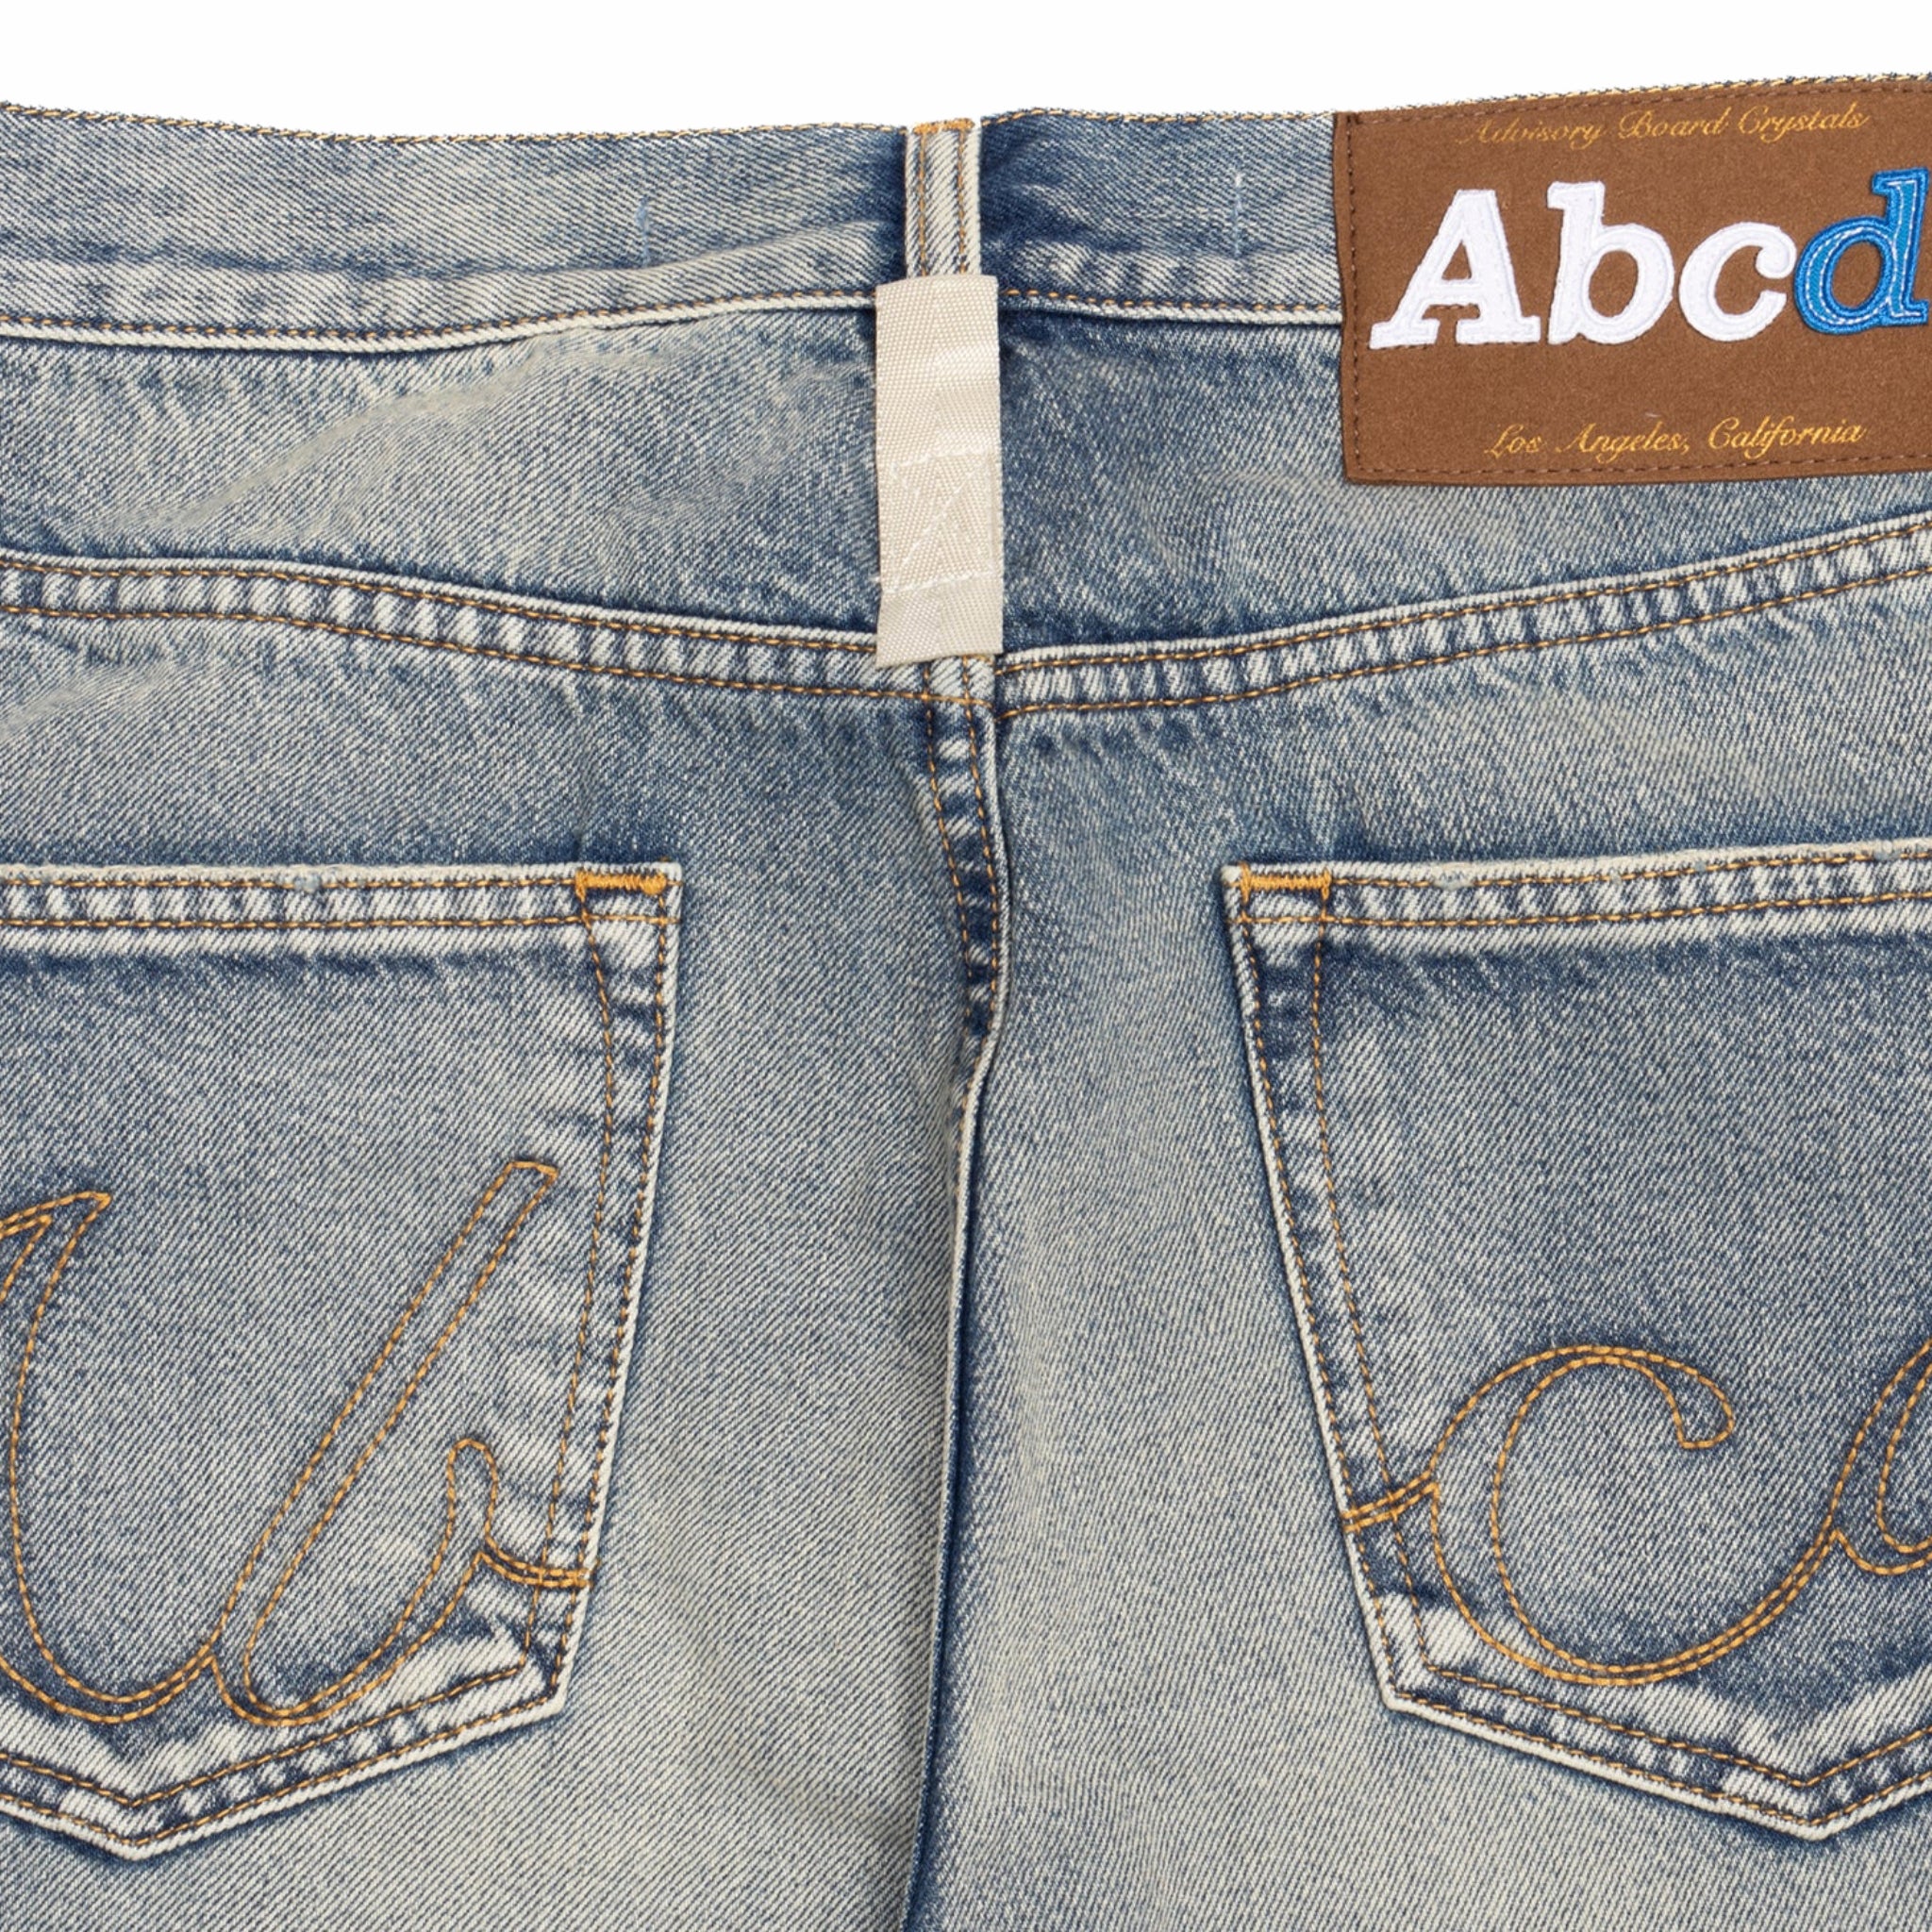 Abcd. Original Fit Jeans (Super Faded Blue) - August Shop